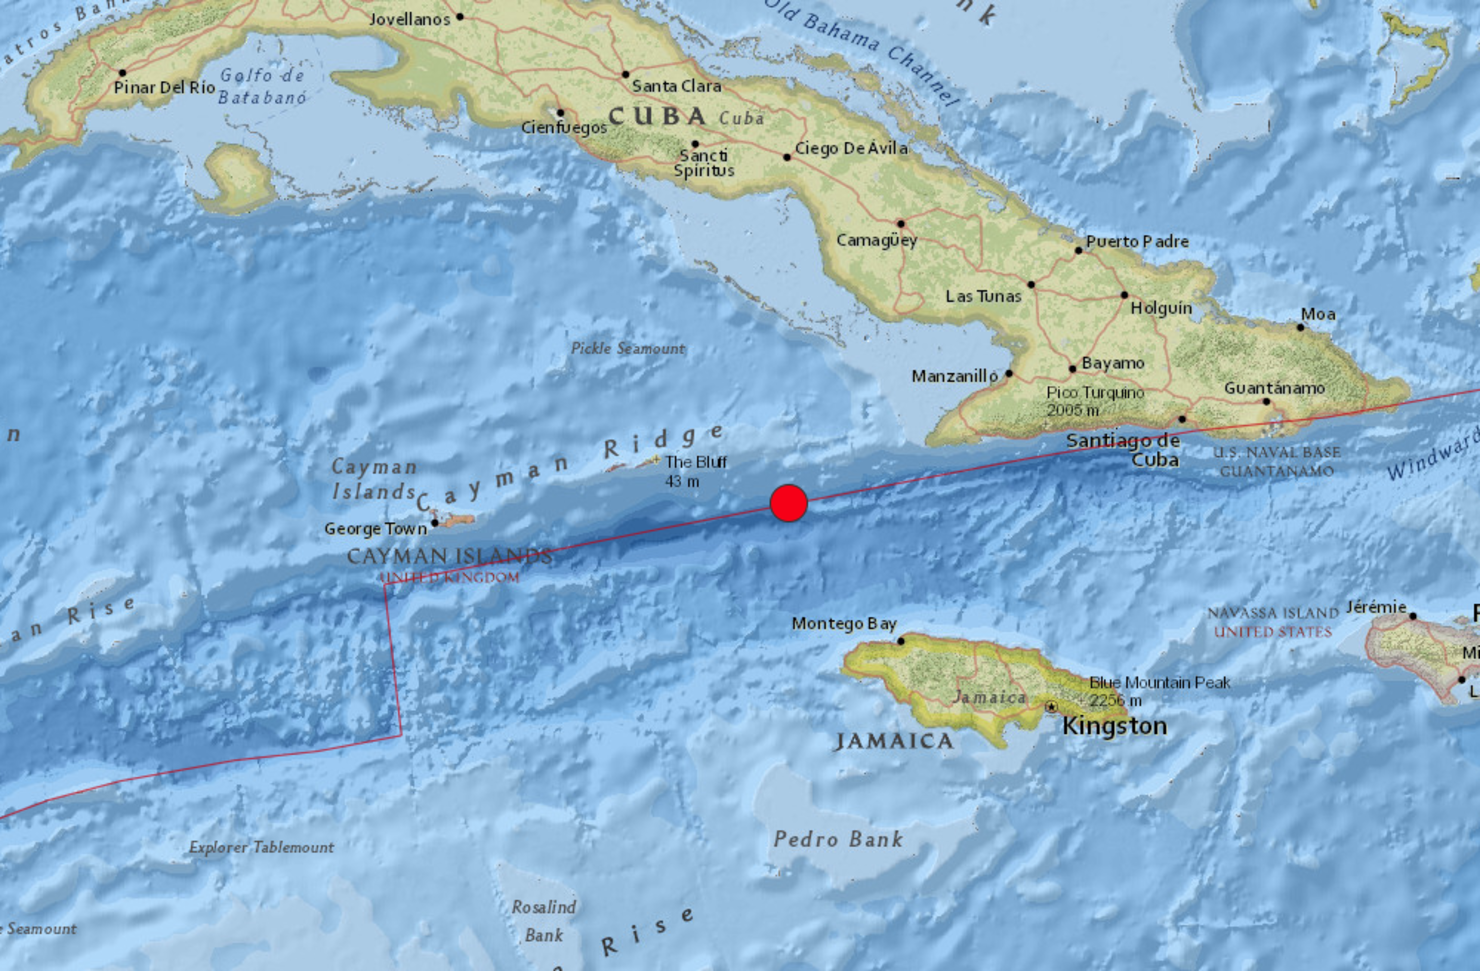 7.7 quake strikes off coast of Jamaica